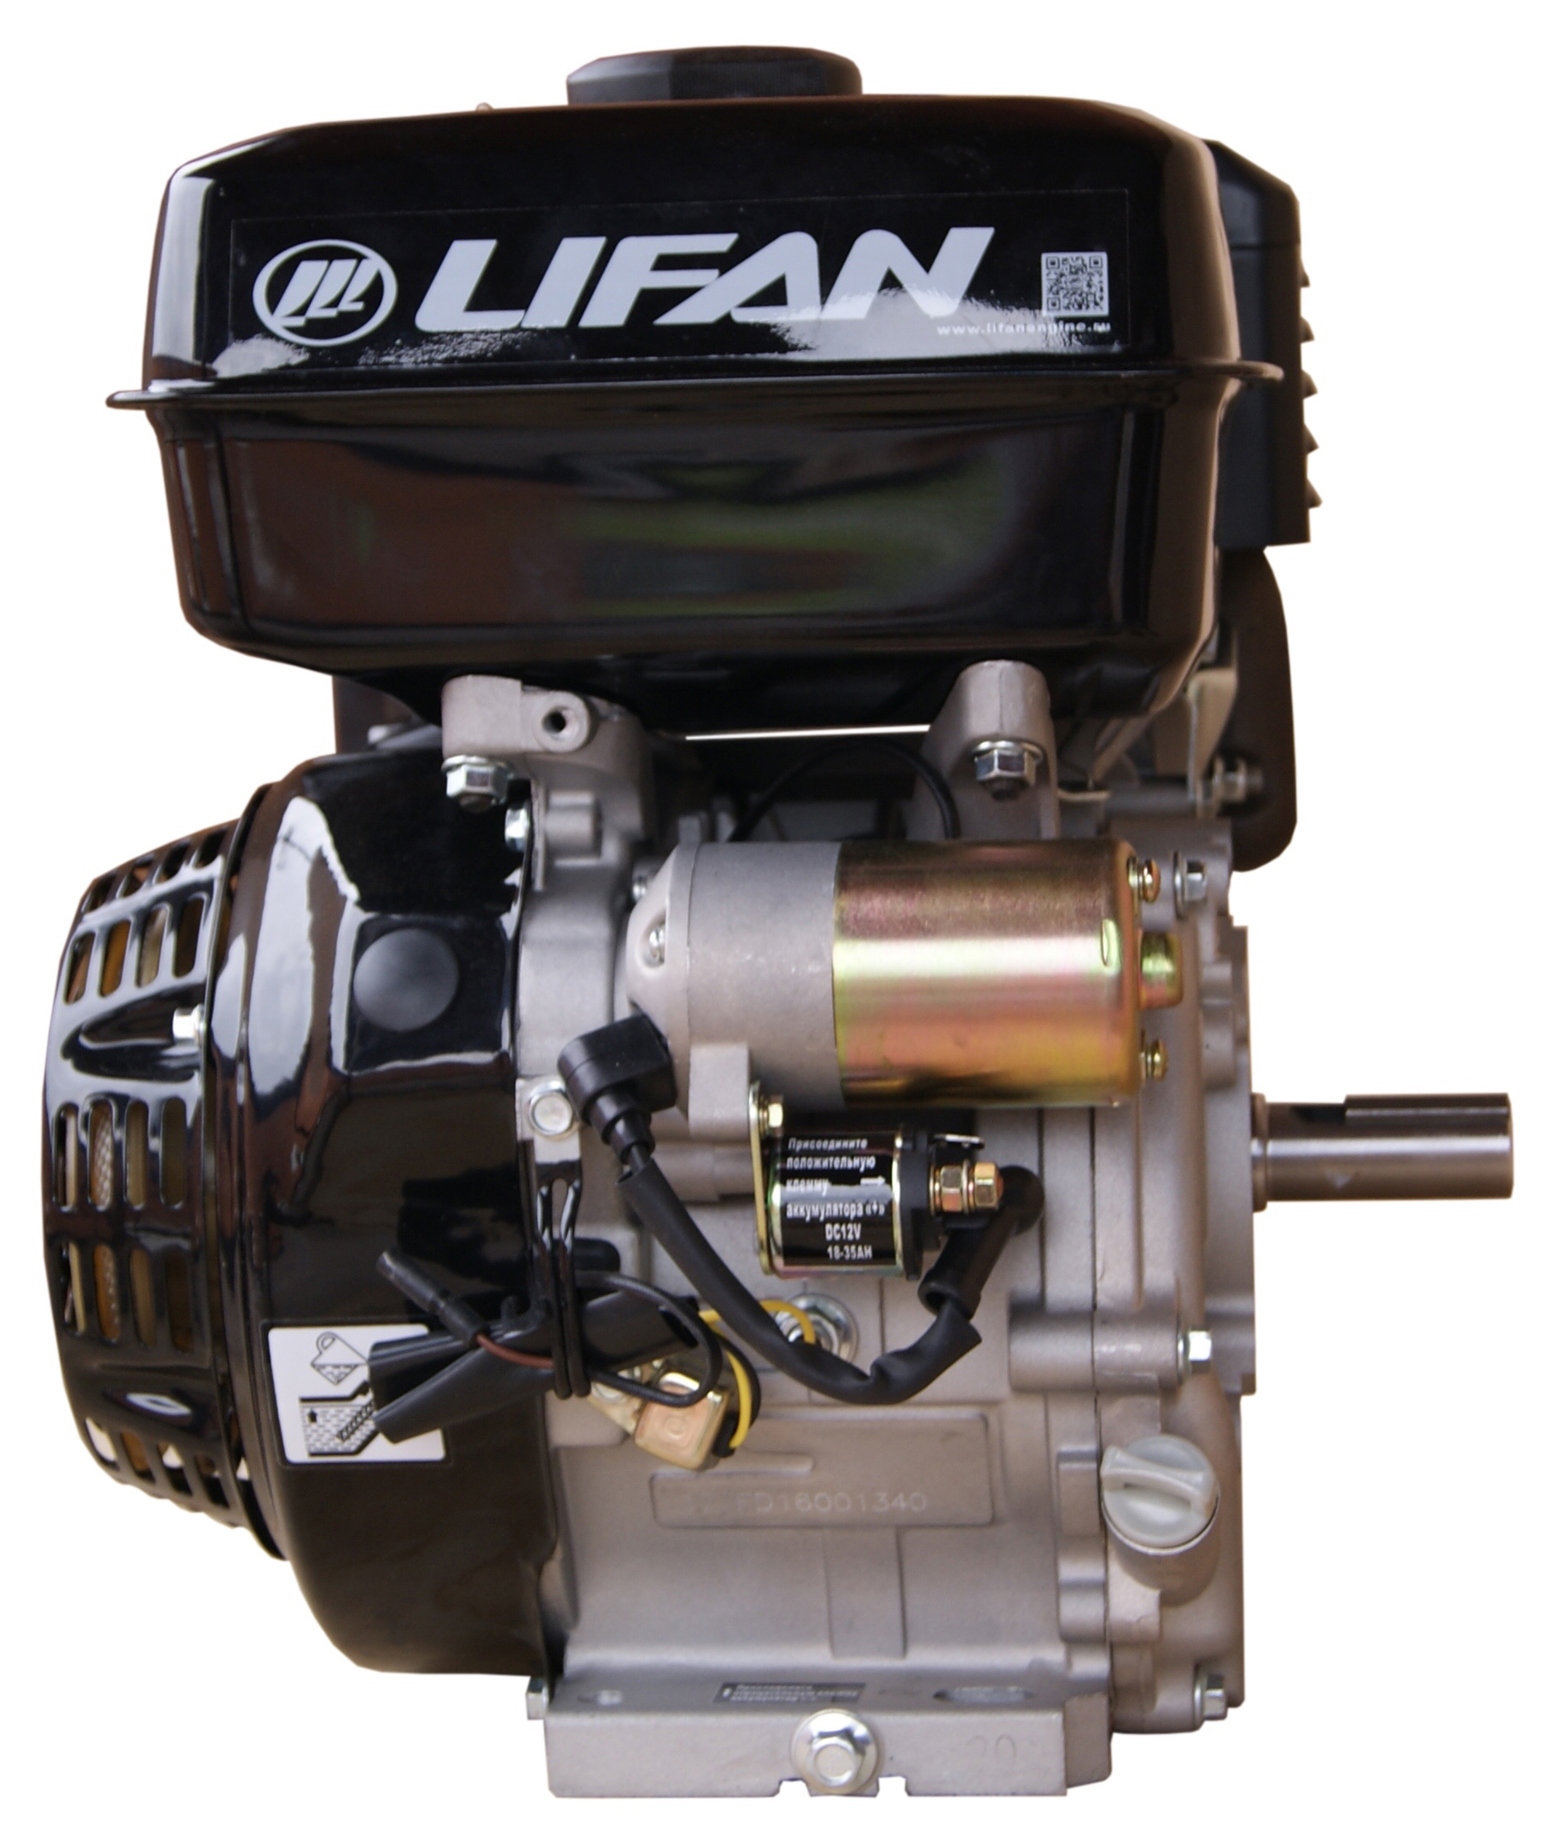  Lifan 177FD (9 лс, 25 мм, электростартер, разболтовка под .